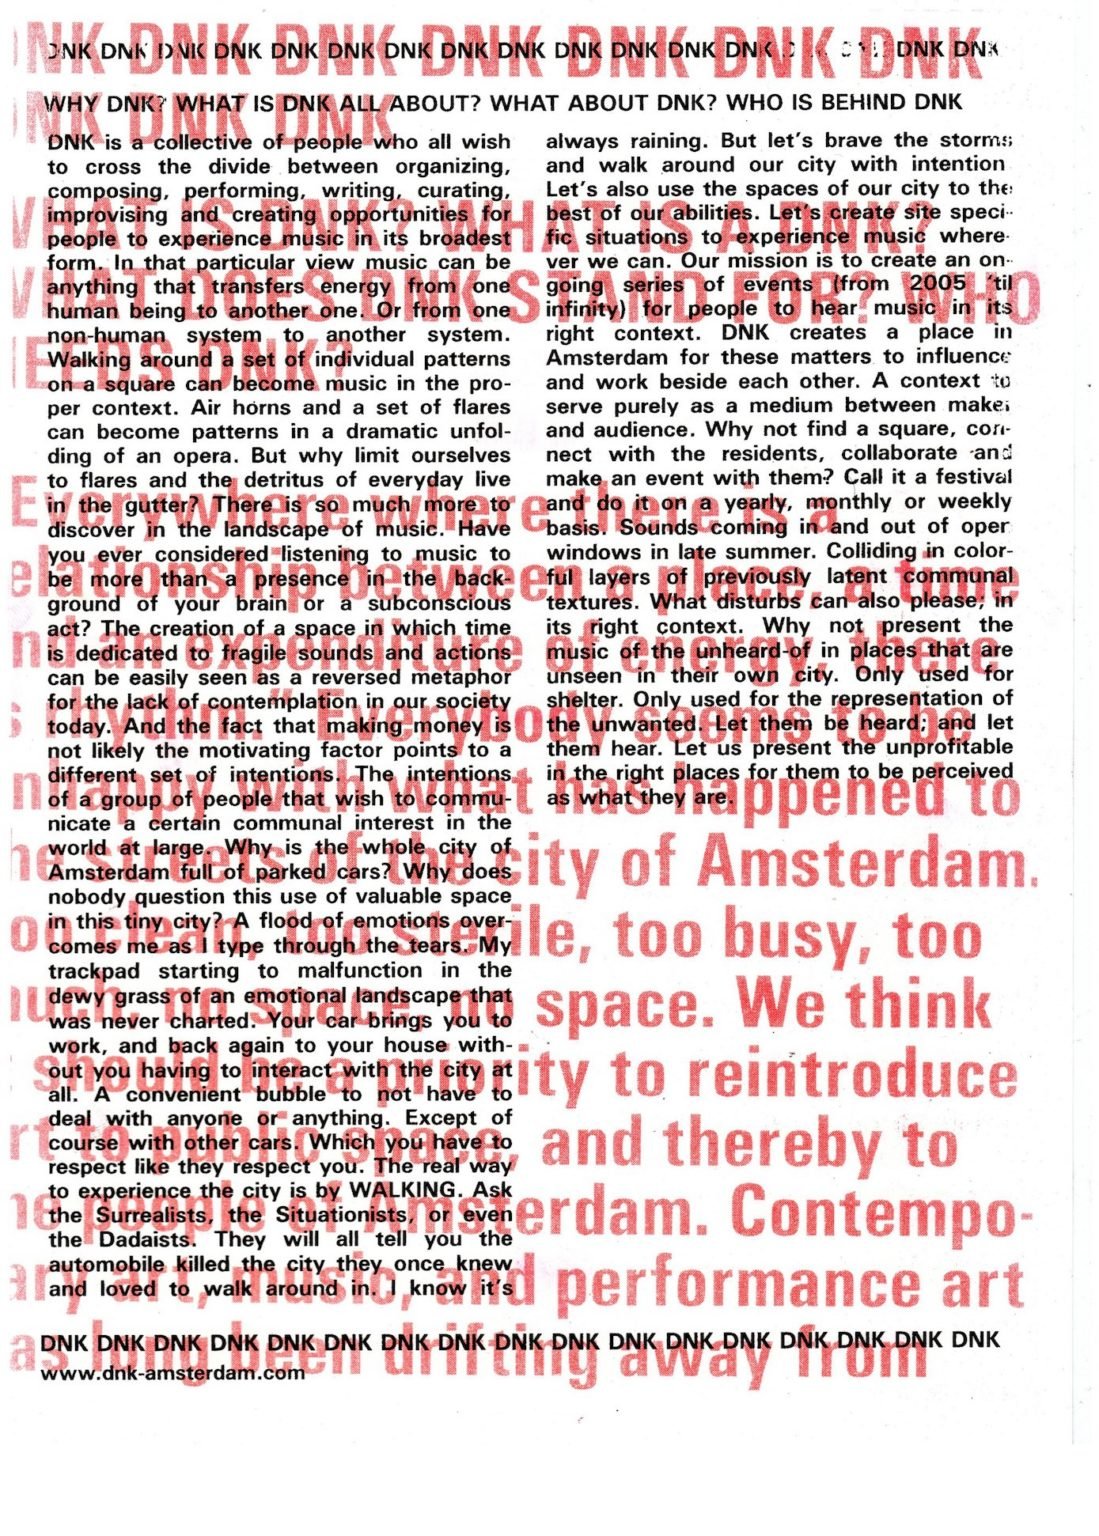 RISO-printed-DNK-manifesto-pamphlet-3-4-1099x1536.jpg